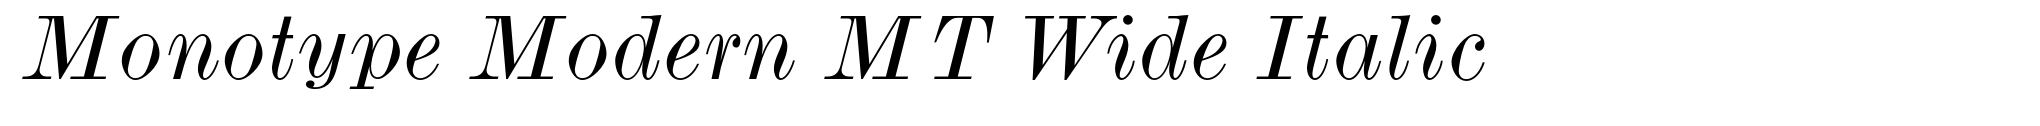 Monotype Modern MT Wide Italic image